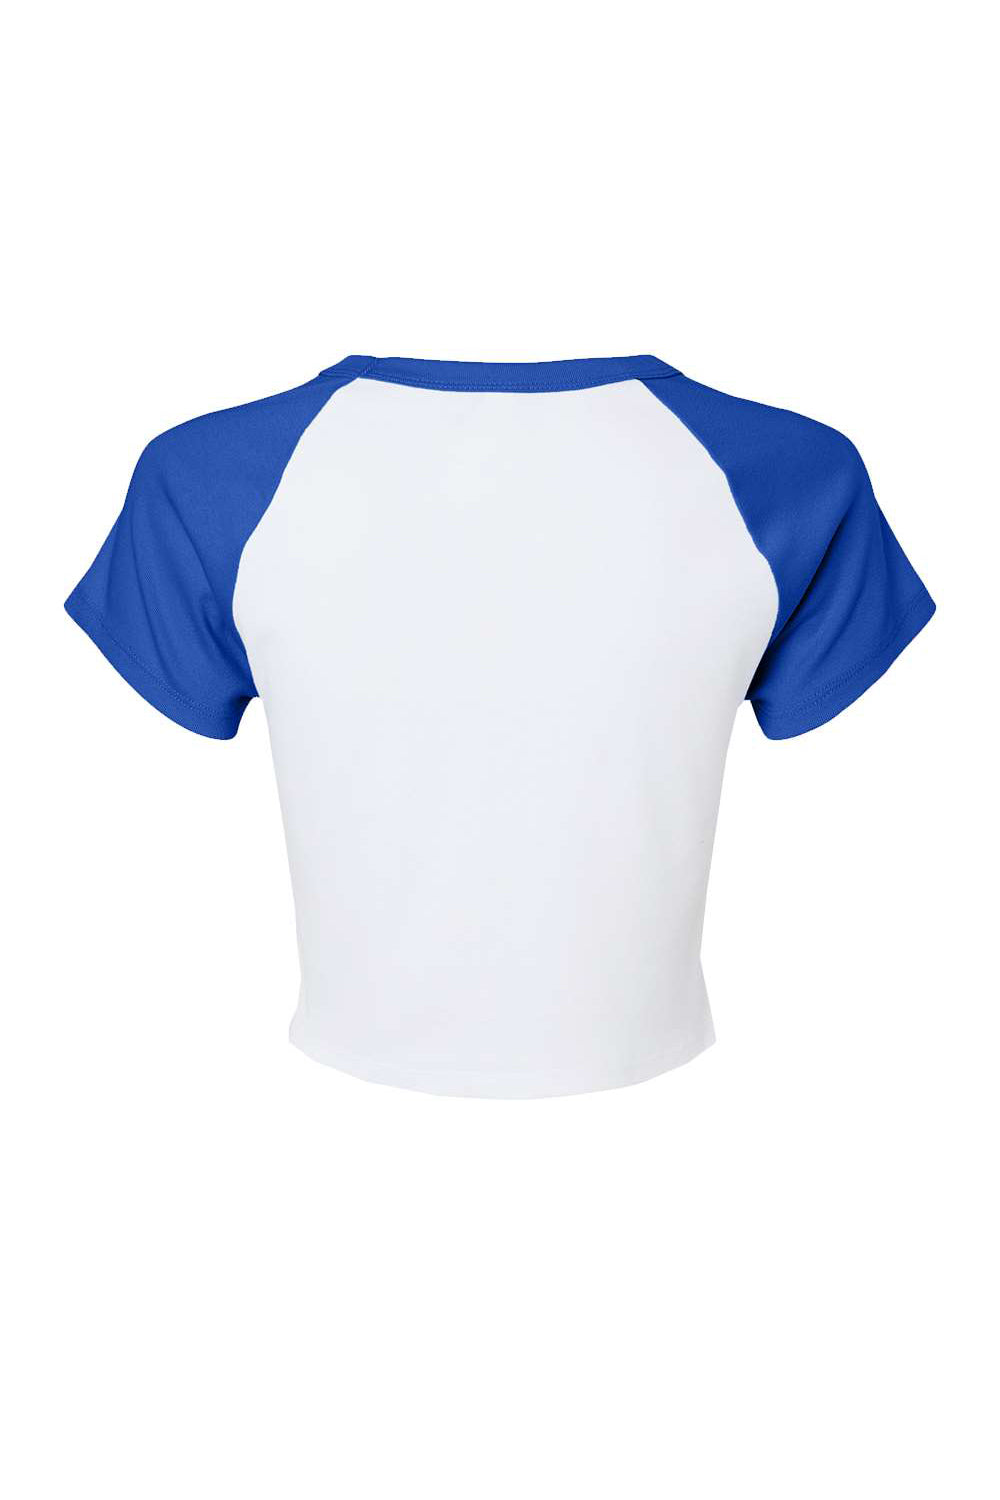 Bella + Canvas 1201 Womens Micro Ribbed Raglan Short Sleeve Crewneck Baby T-Shirt White/True Royal Blue Flat Back